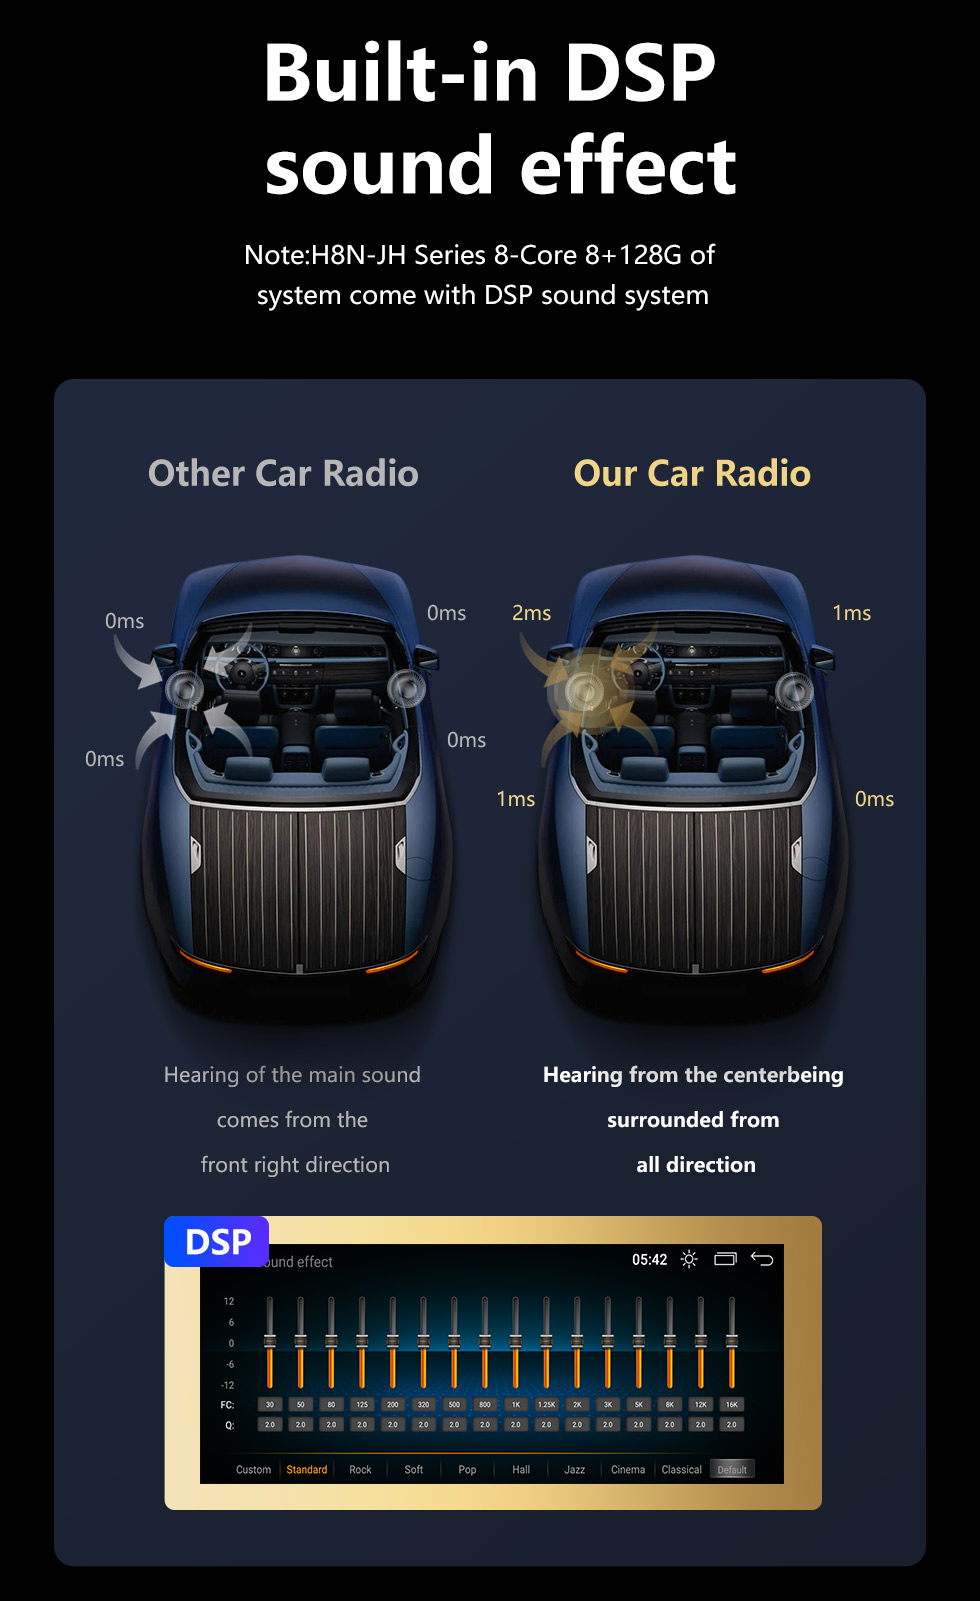 Audi Q5 2009-2017 GPS-Navigationsradio 12,3 Zoll – Multigenus